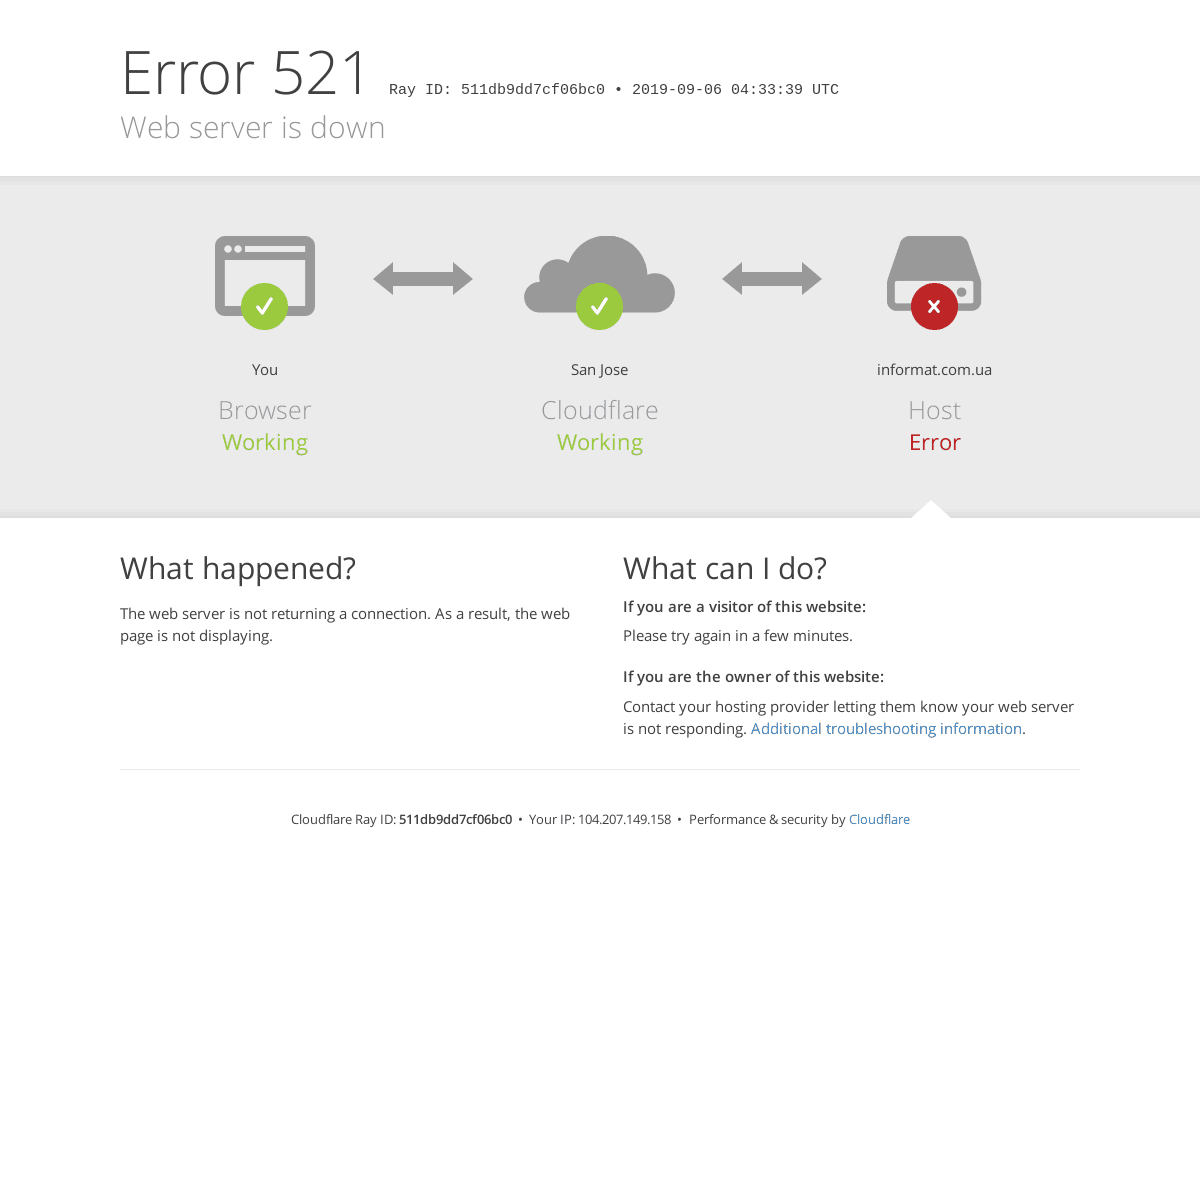 informat.com.ua | 521: Web server is down